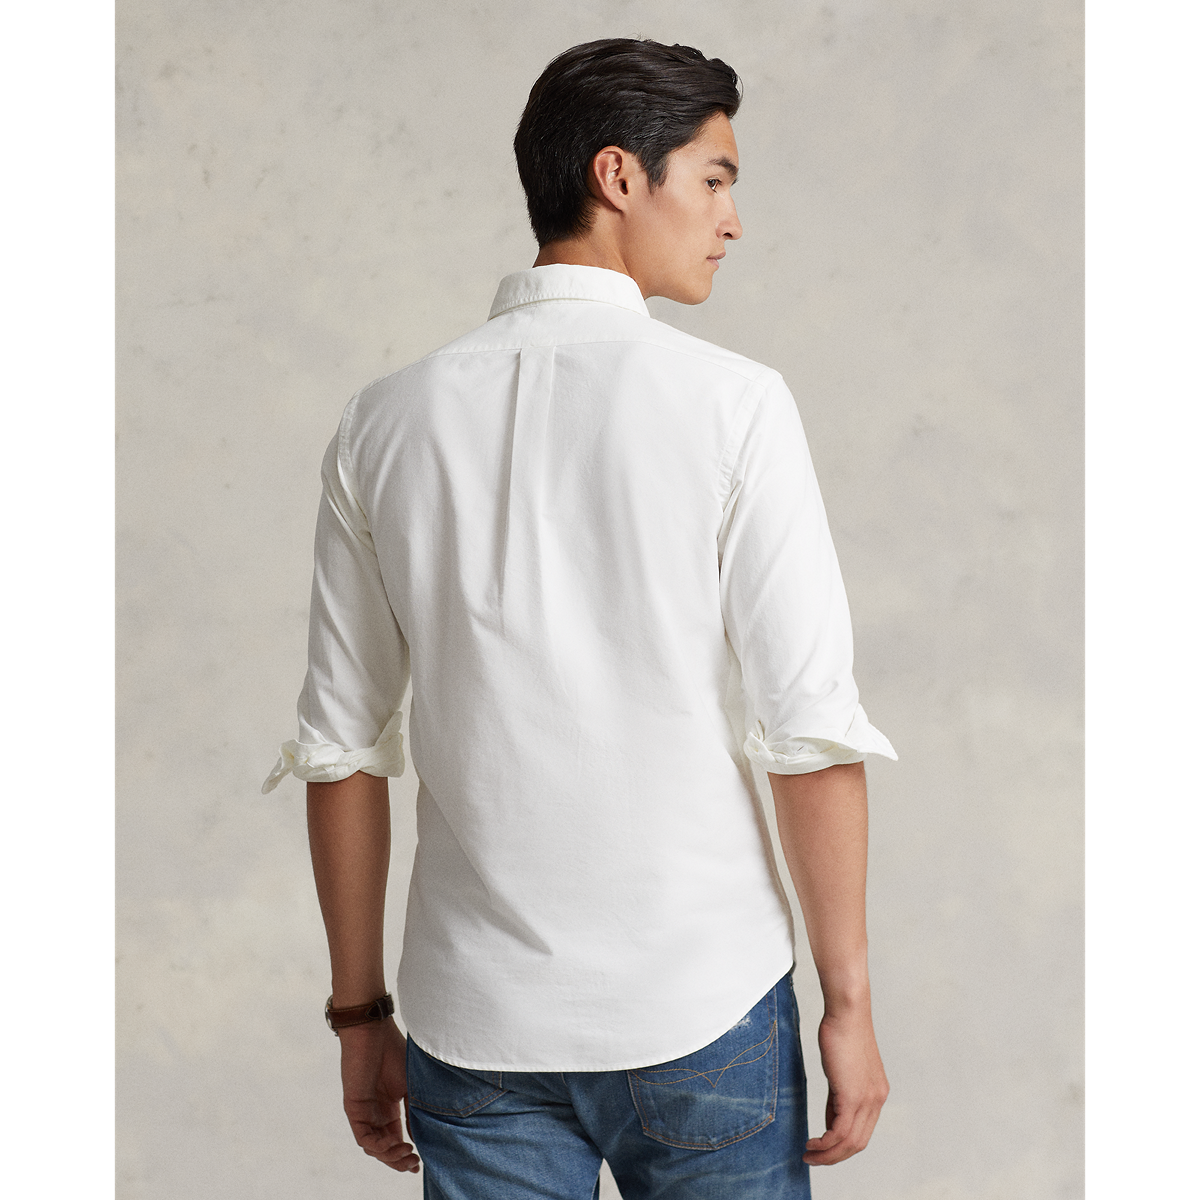 Ralph Lauren Oxford Sport Shirt - Classic Fit  ZSC31A White